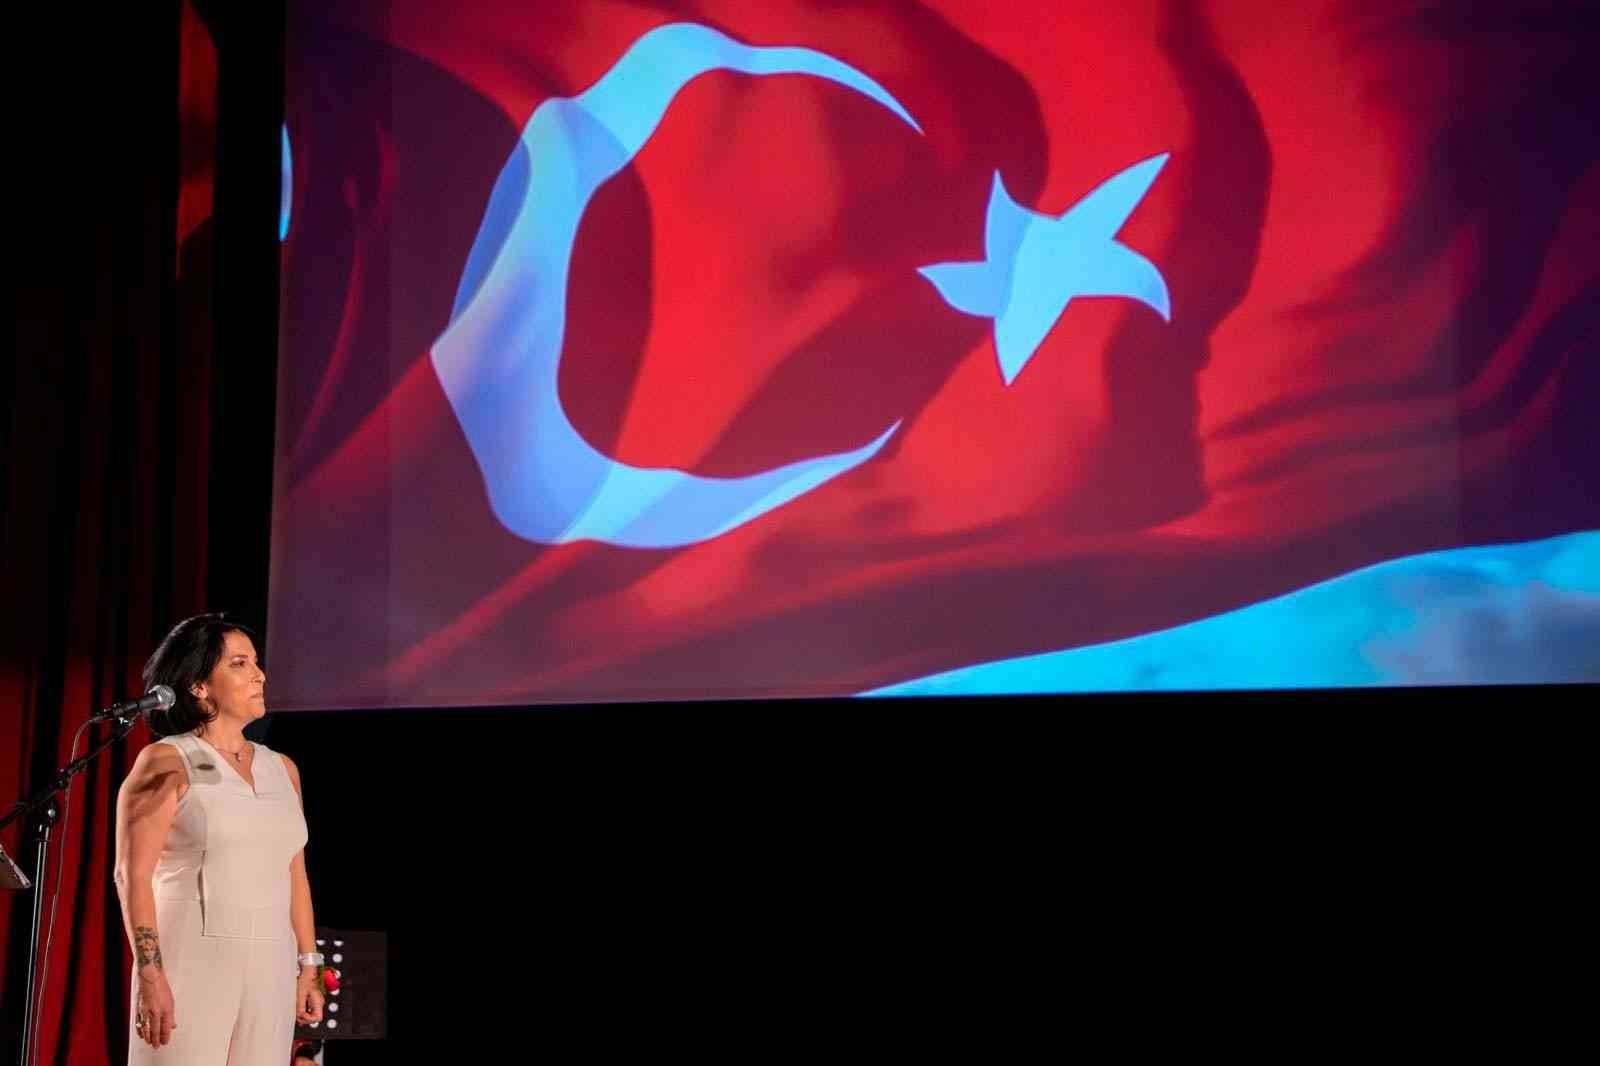 Erzincan’da “Cumhuriyet” konseri verildi #erzincan